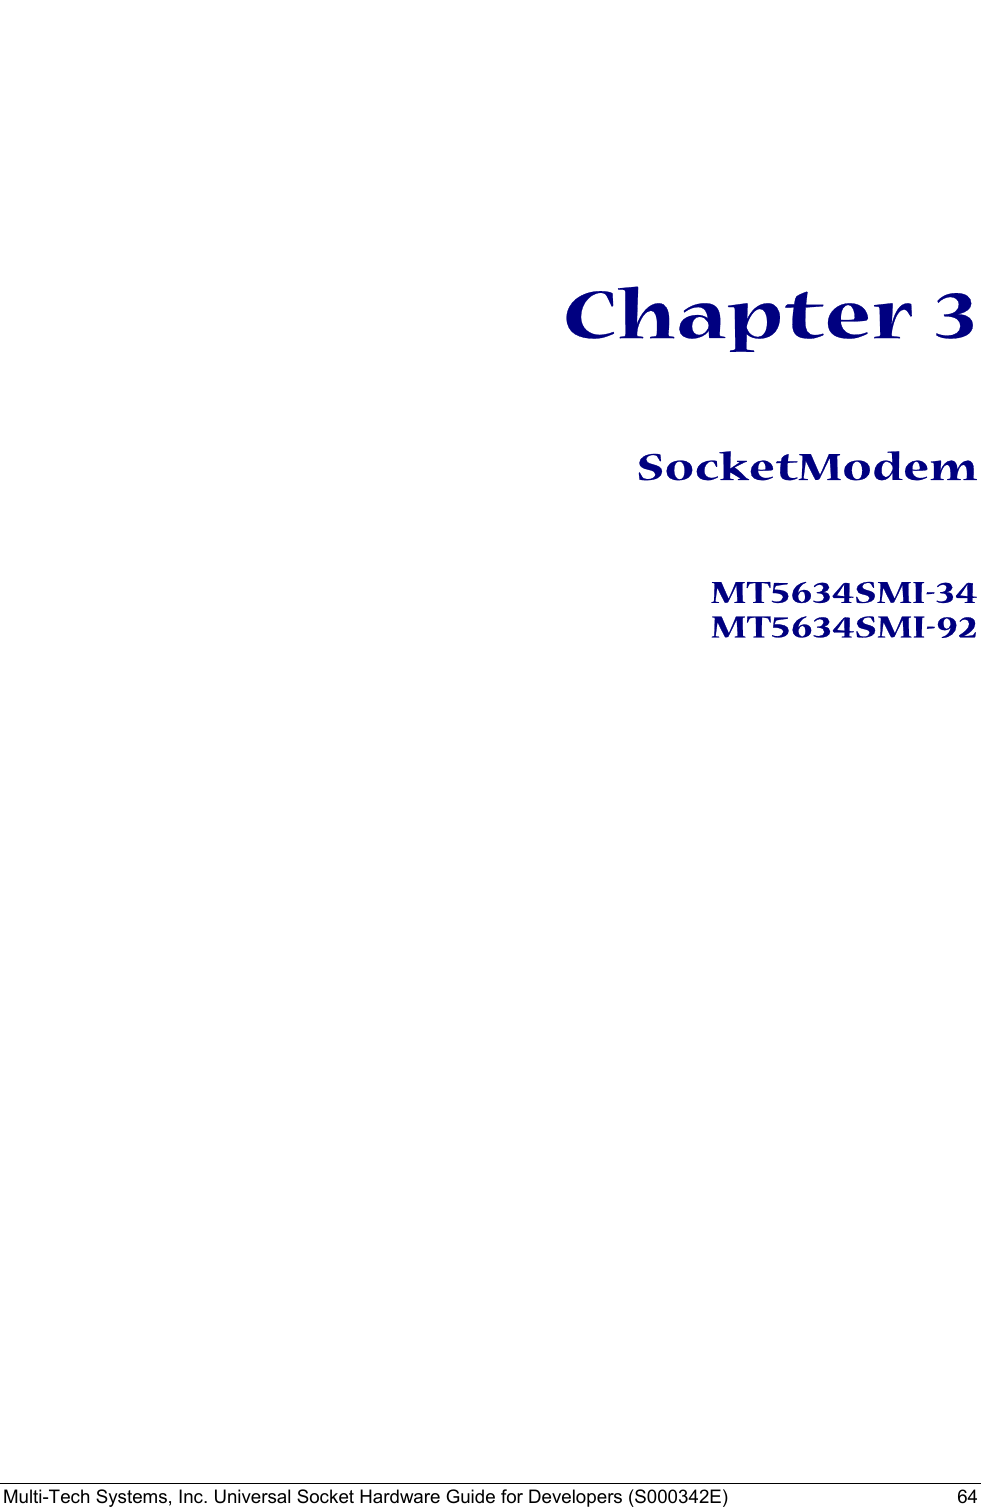  Multi-Tech Systems, Inc. Universal Socket Hardware Guide for Developers (S000342E)  64         Chapter 3   SocketModem   MT5634SMI-34 MT5634SMI-92    